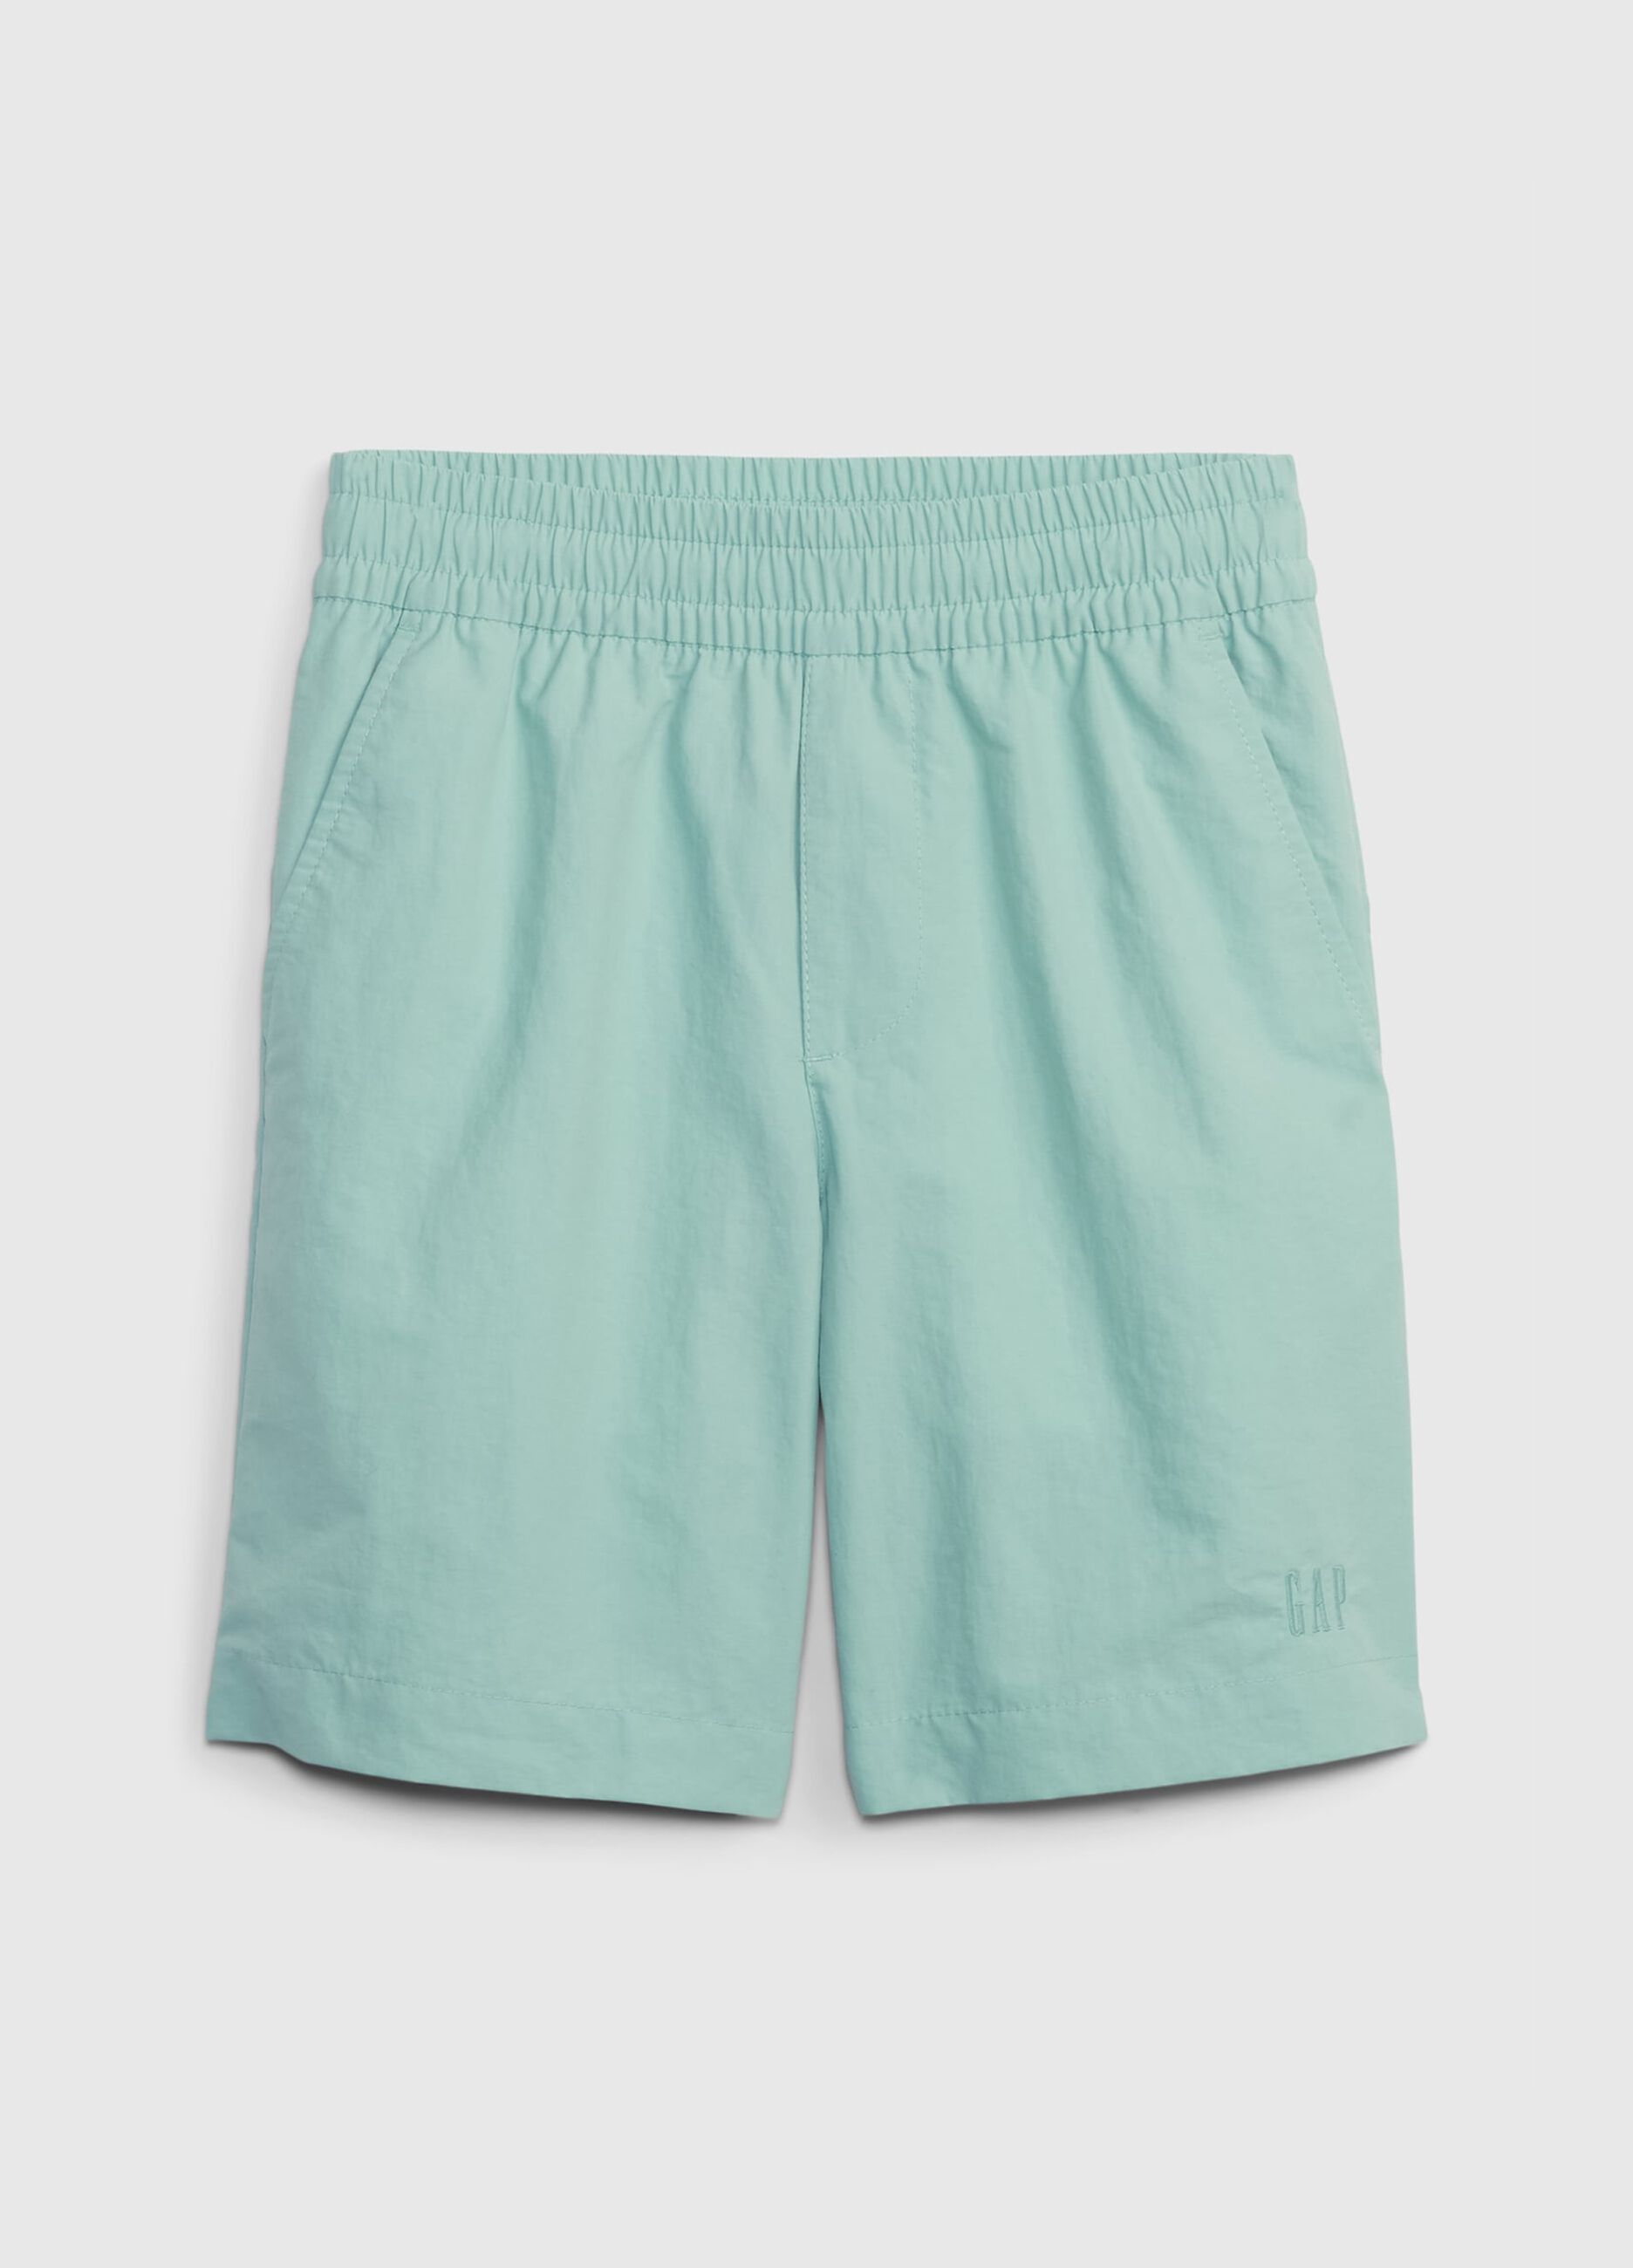 Bermuda shorts in technical fabric